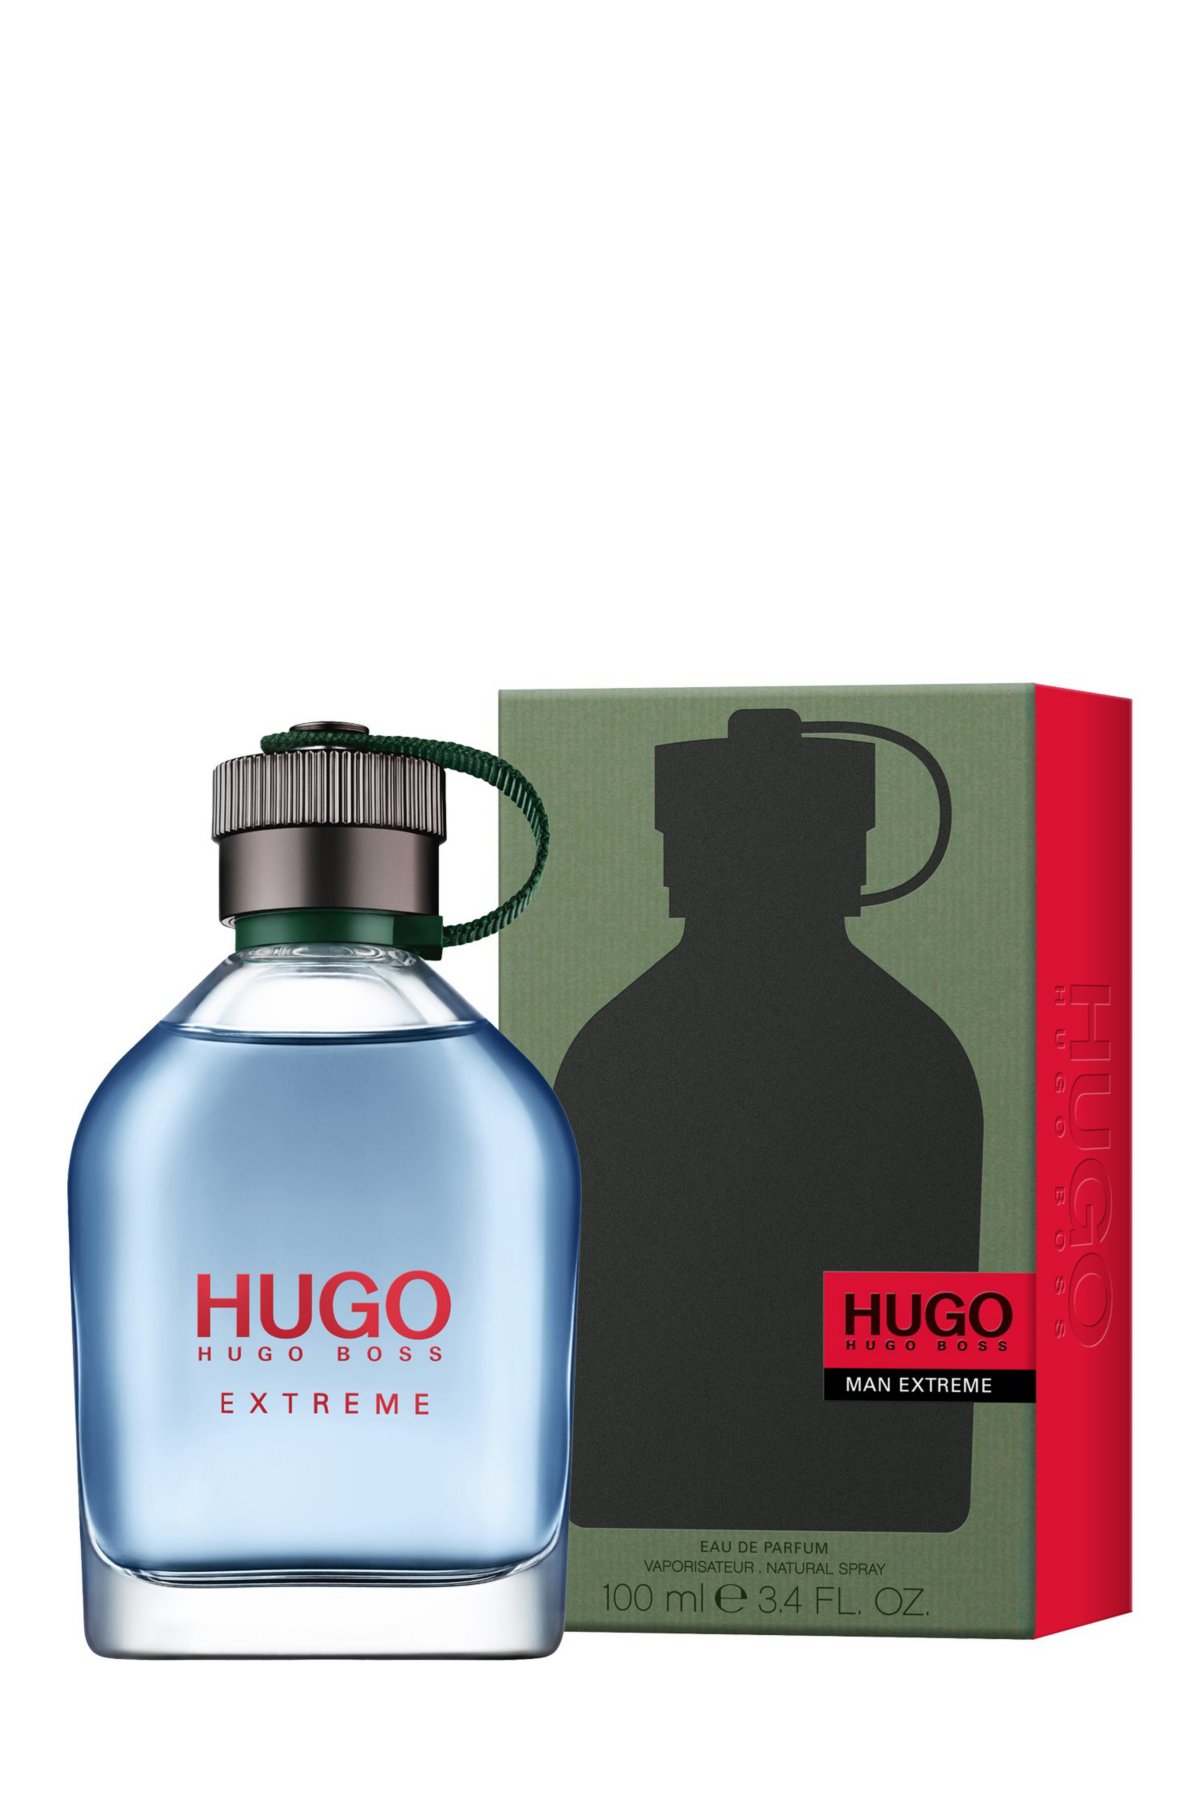 Perfume Hugo Man 200 ML